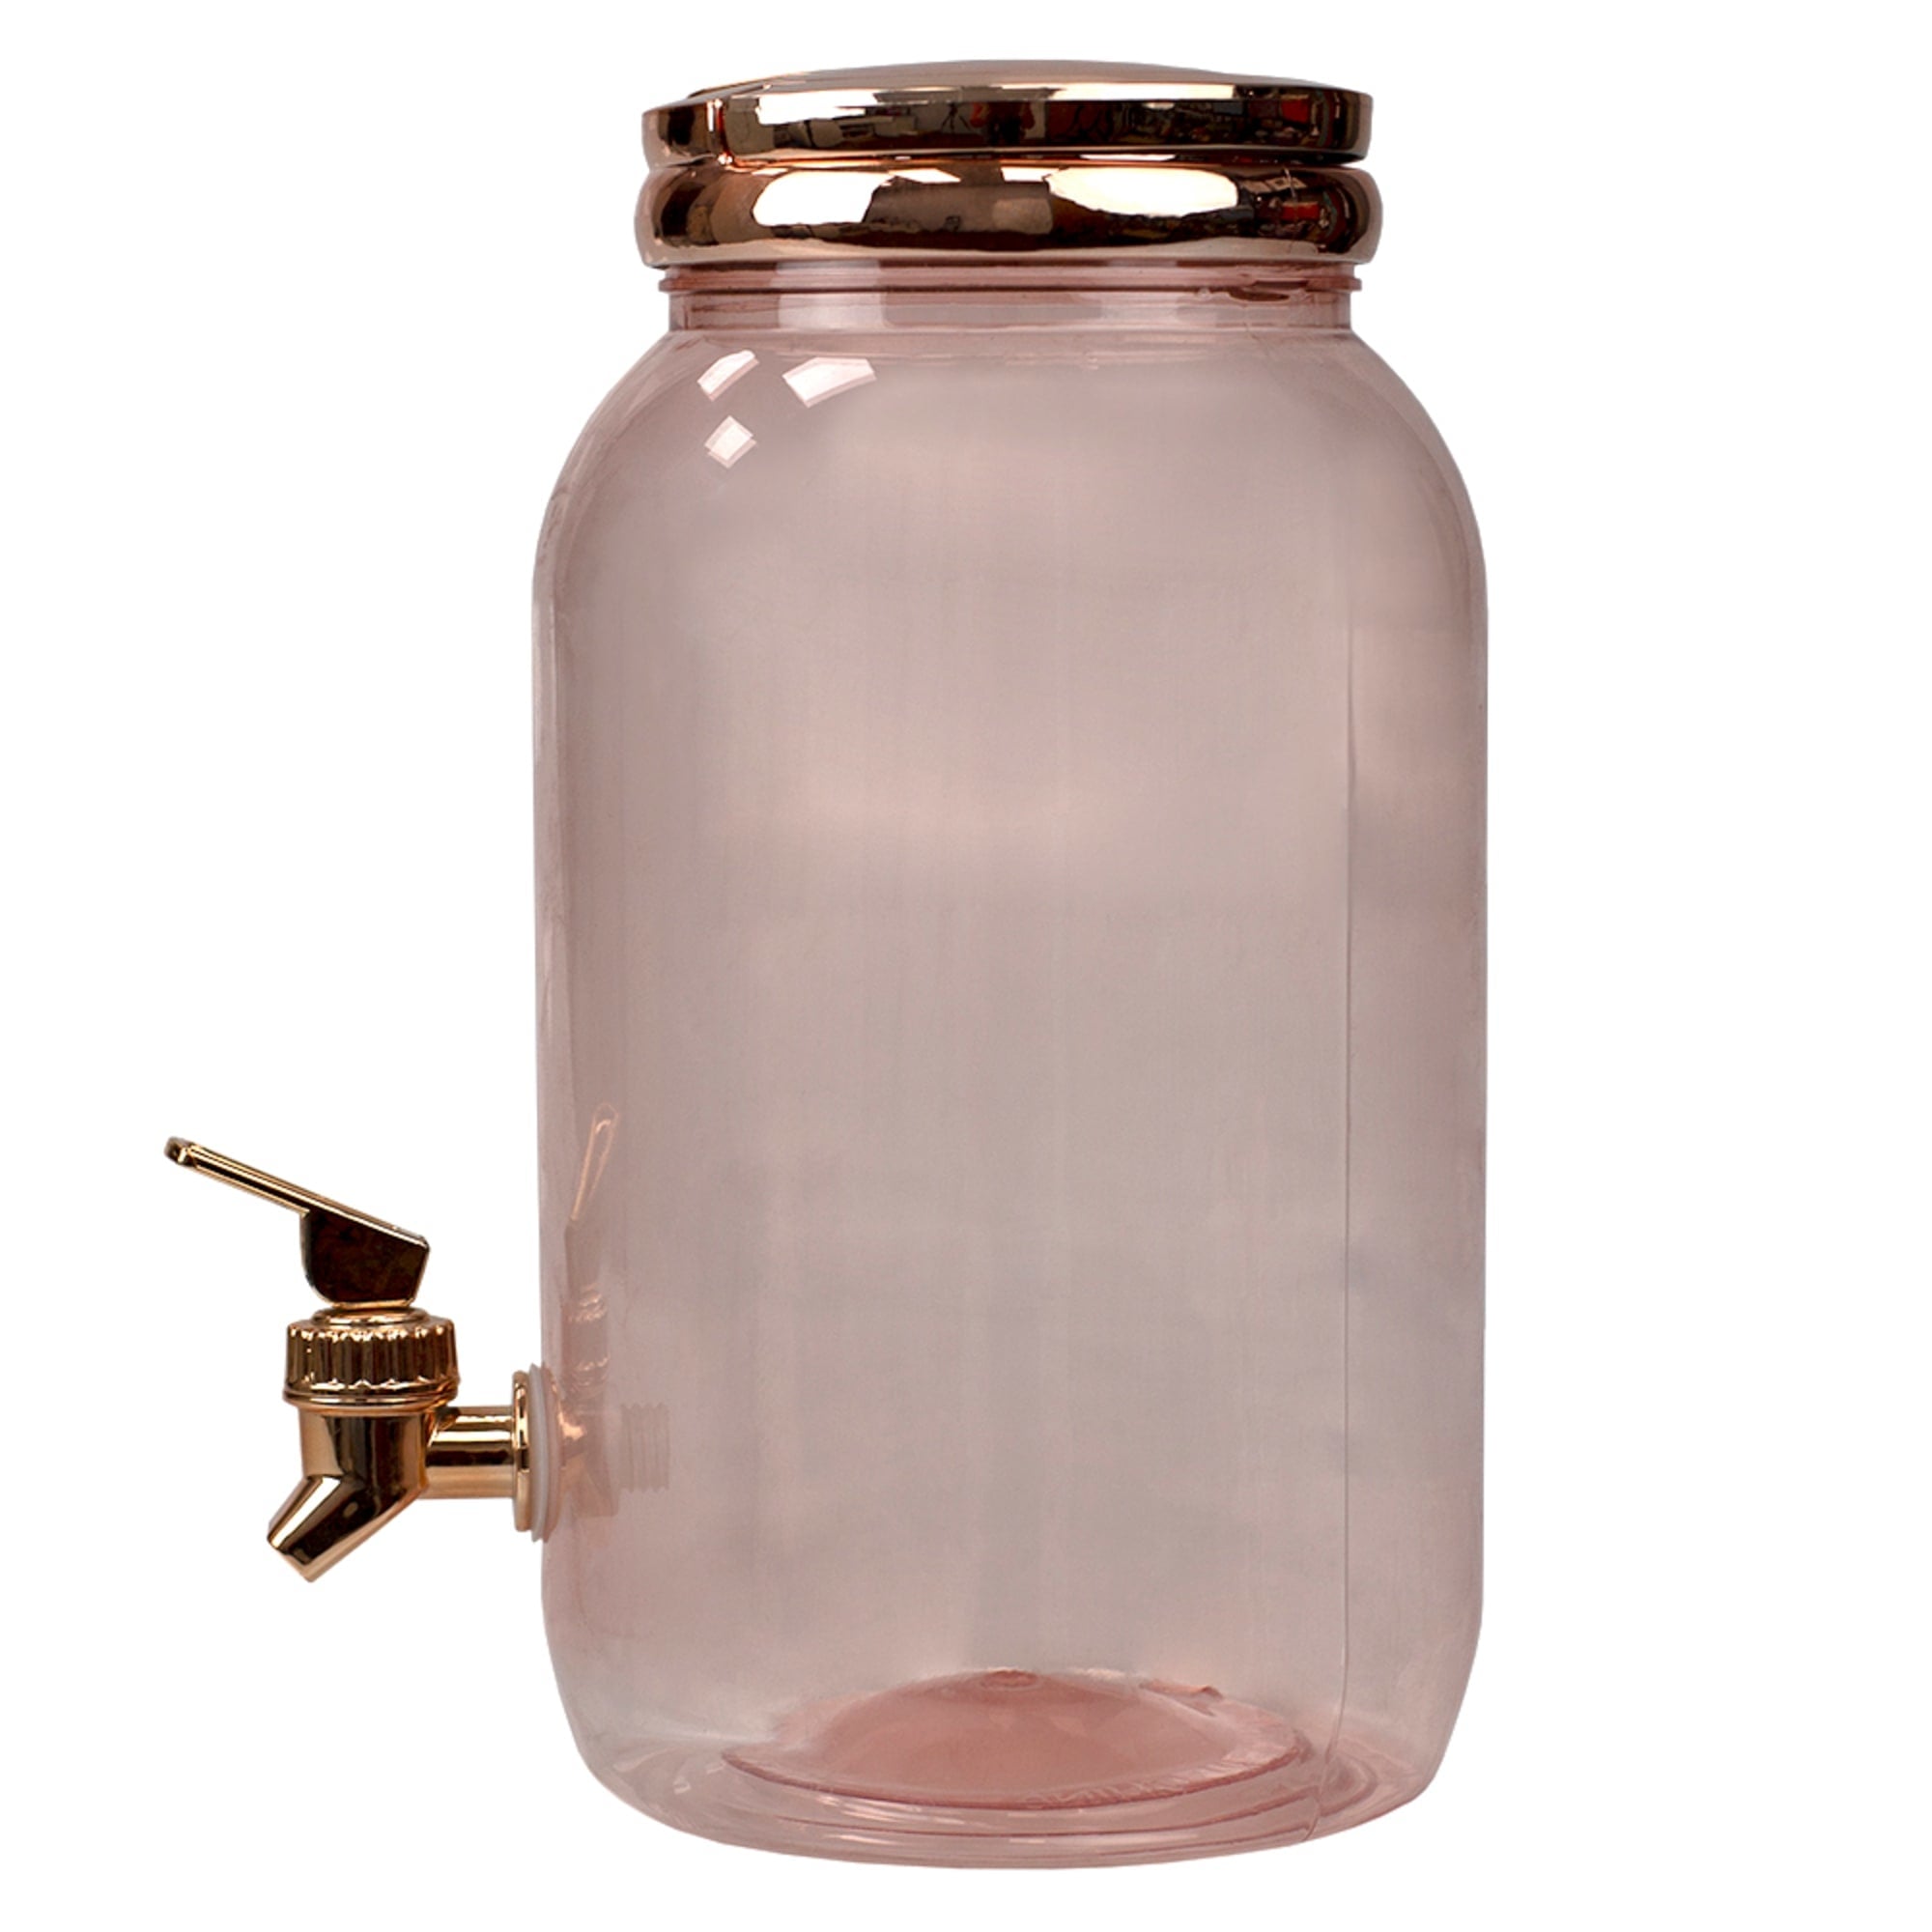 Home Basics 3.78 Lt Plastic Beverage Dispenser, Rose Gold $8.00 EACH, CASE PACK OF 6